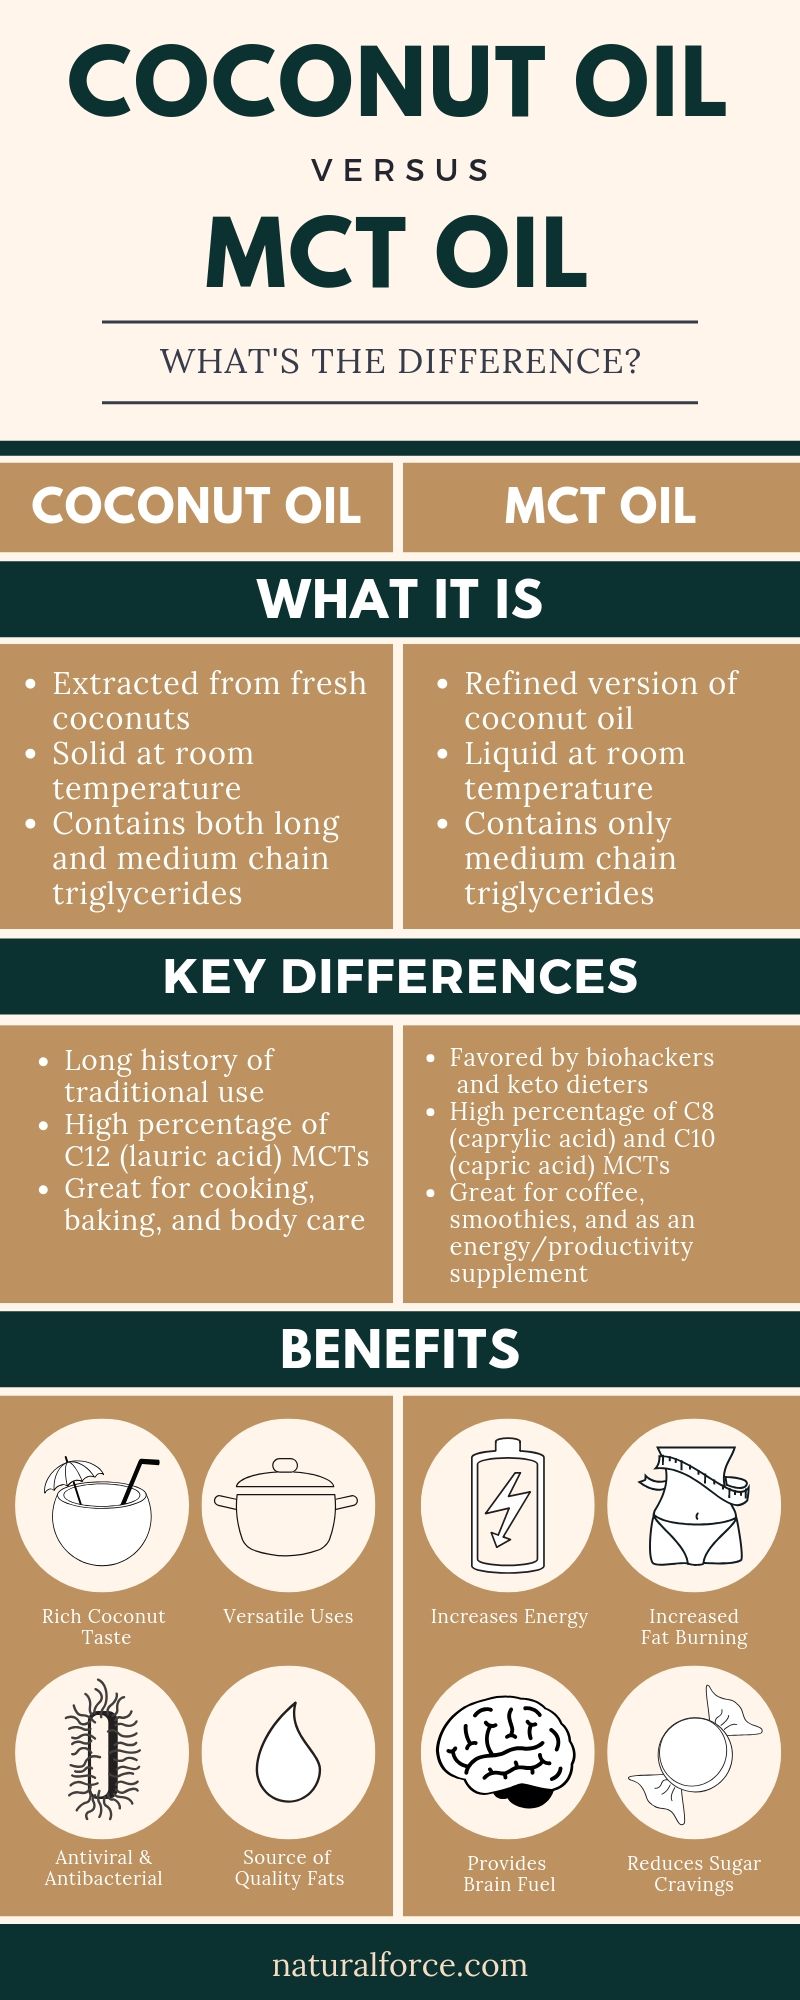 mct oil vs coconut oil infographic